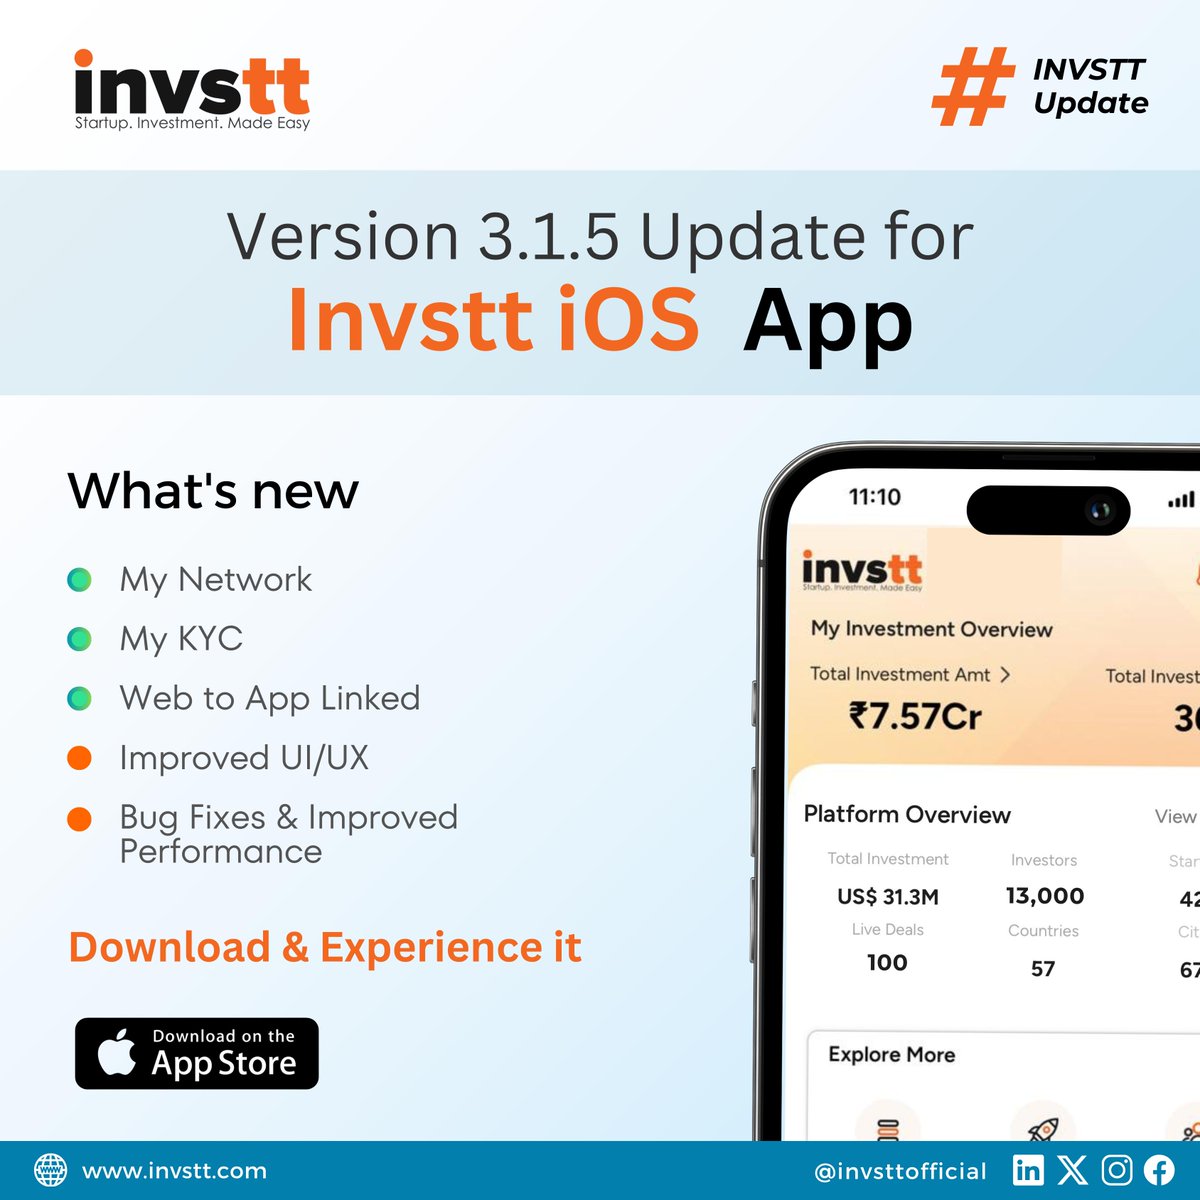 🌟 What’s New with Invstt iOS App Version 3.1.5? 

apps.apple.com/in/app/invstt/…

#InvsttApp #iOSUpdate #InvestmentTools #TechUpdate